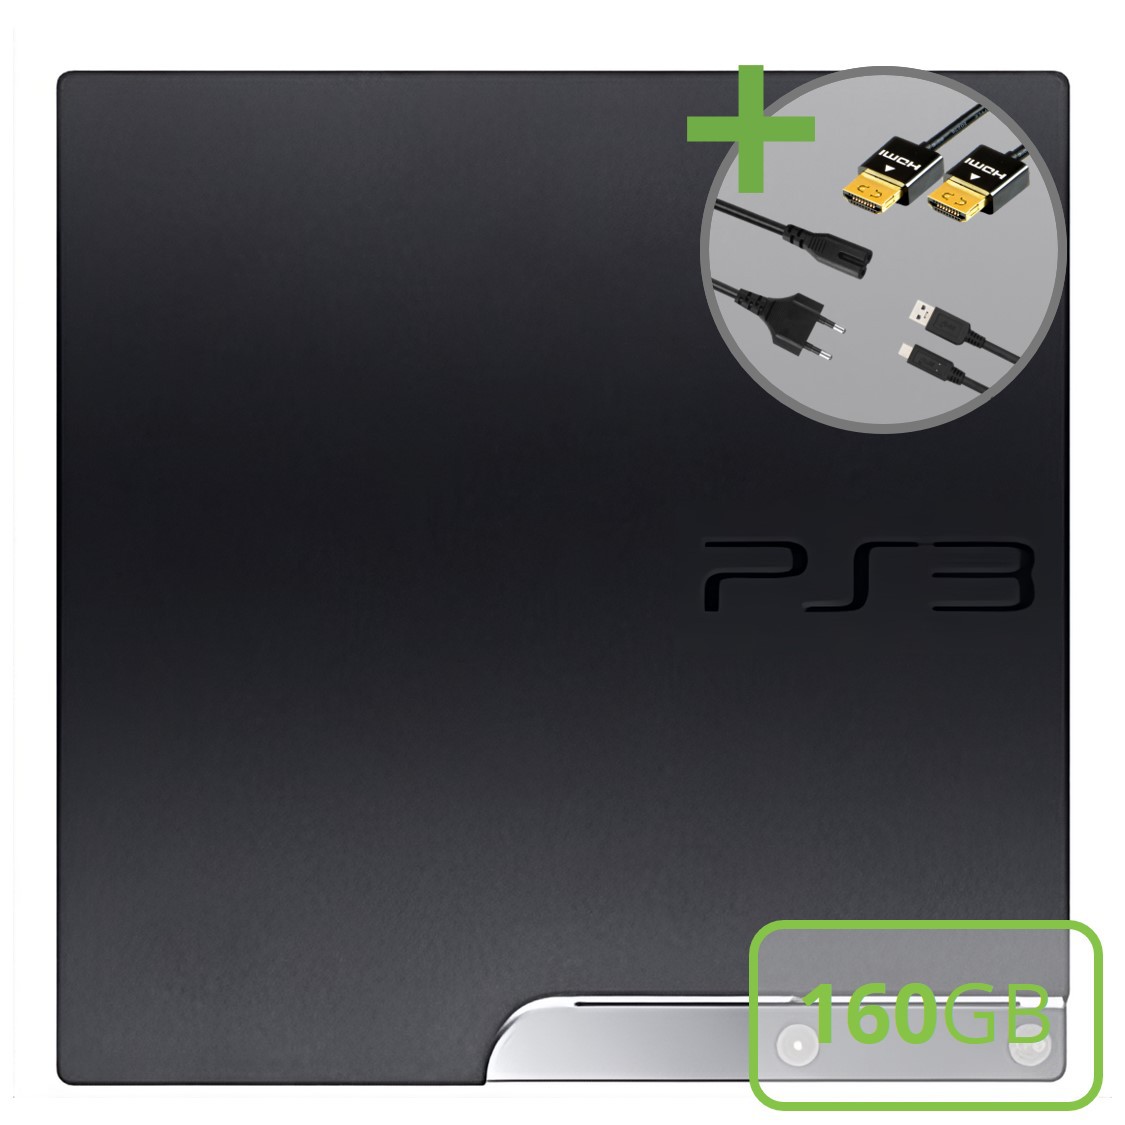 Sony PlayStation 3 Slim (160GB) Starter Pack - DualShock Edition - Playstation 3 Hardware - 3